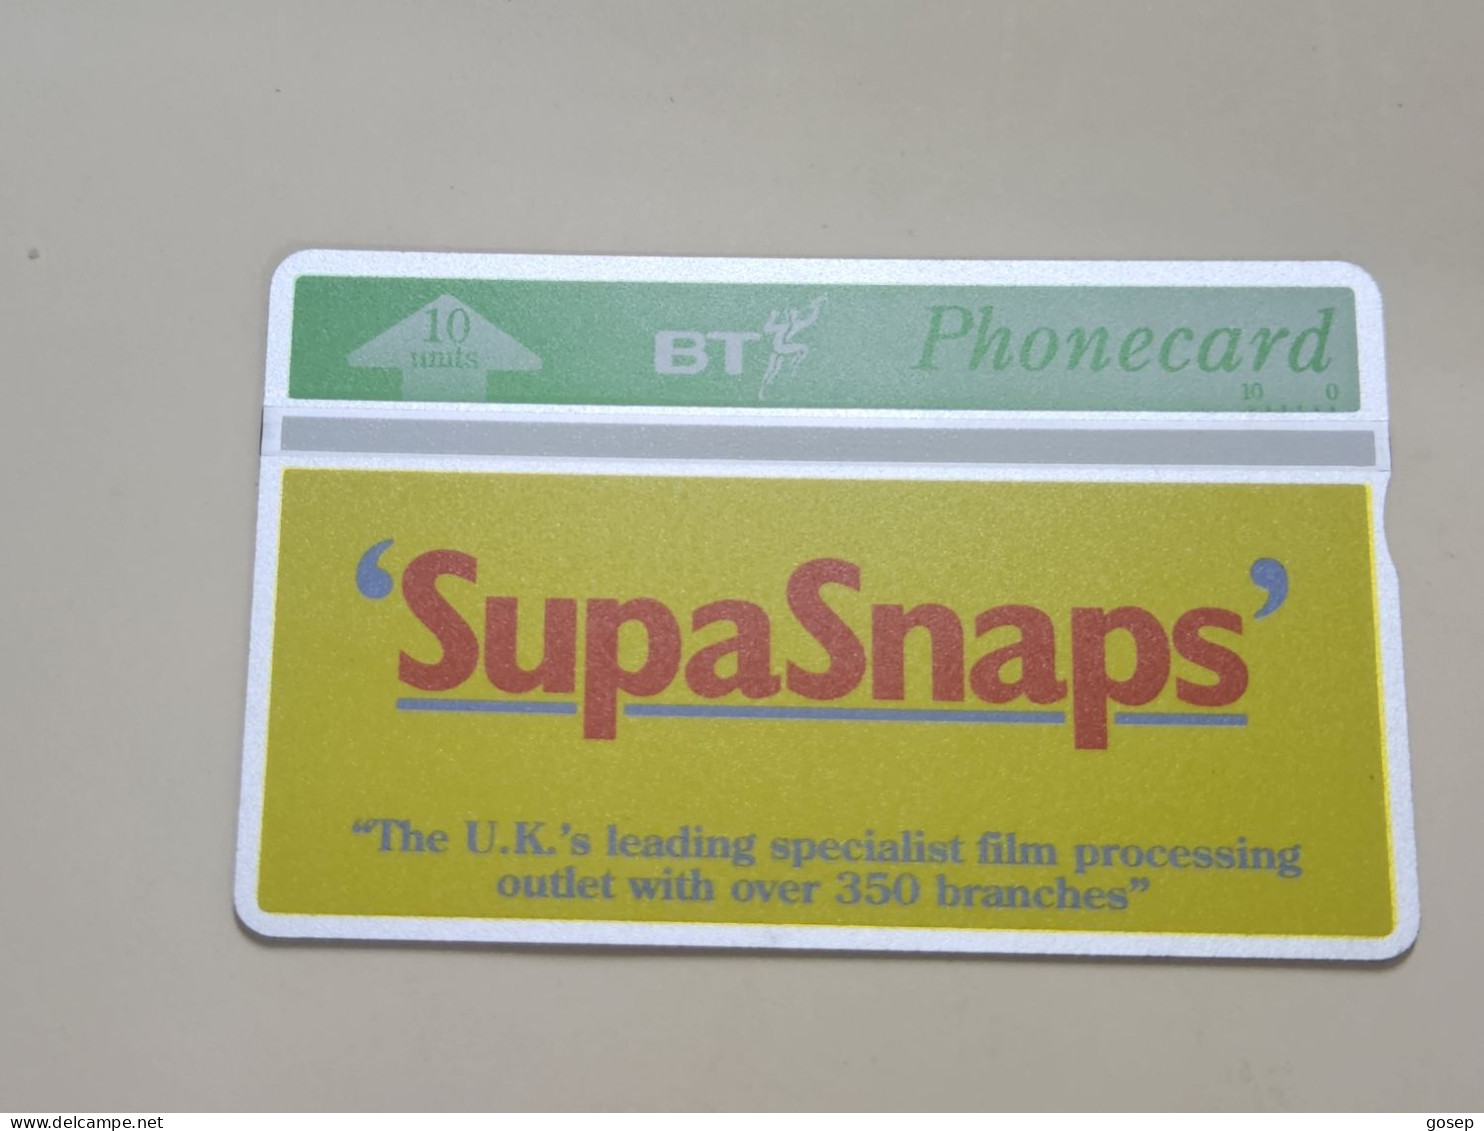 United Kingdom-(BTA040)-SUPASNAPS-(10units)-(79)-(246A75991)-price Cataloge10.00£-mint+1card Prepiad Free - BT Advertising Issues